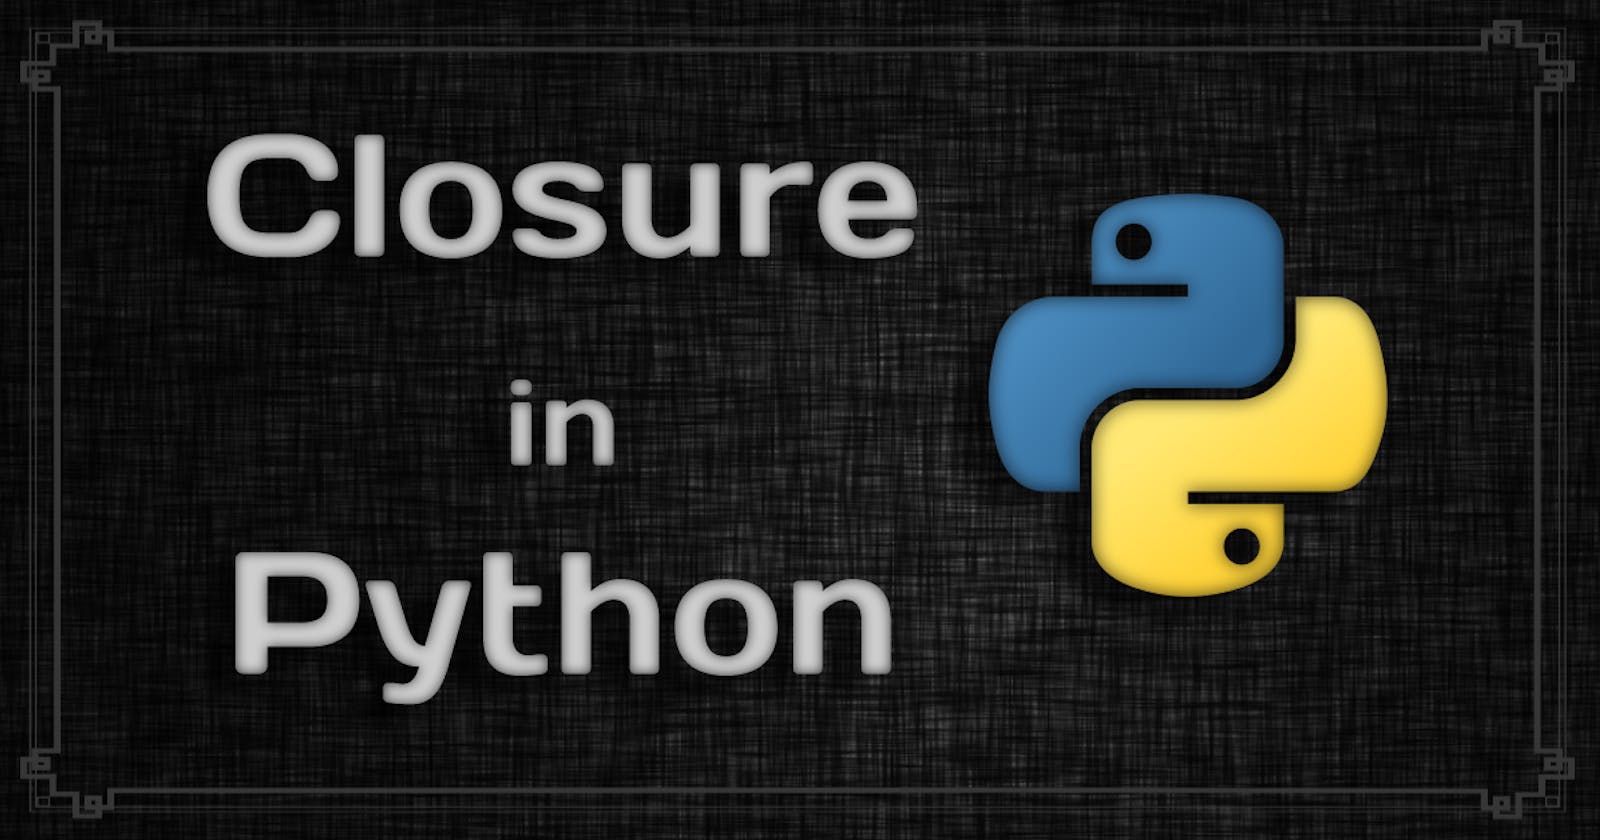 Closure in Python